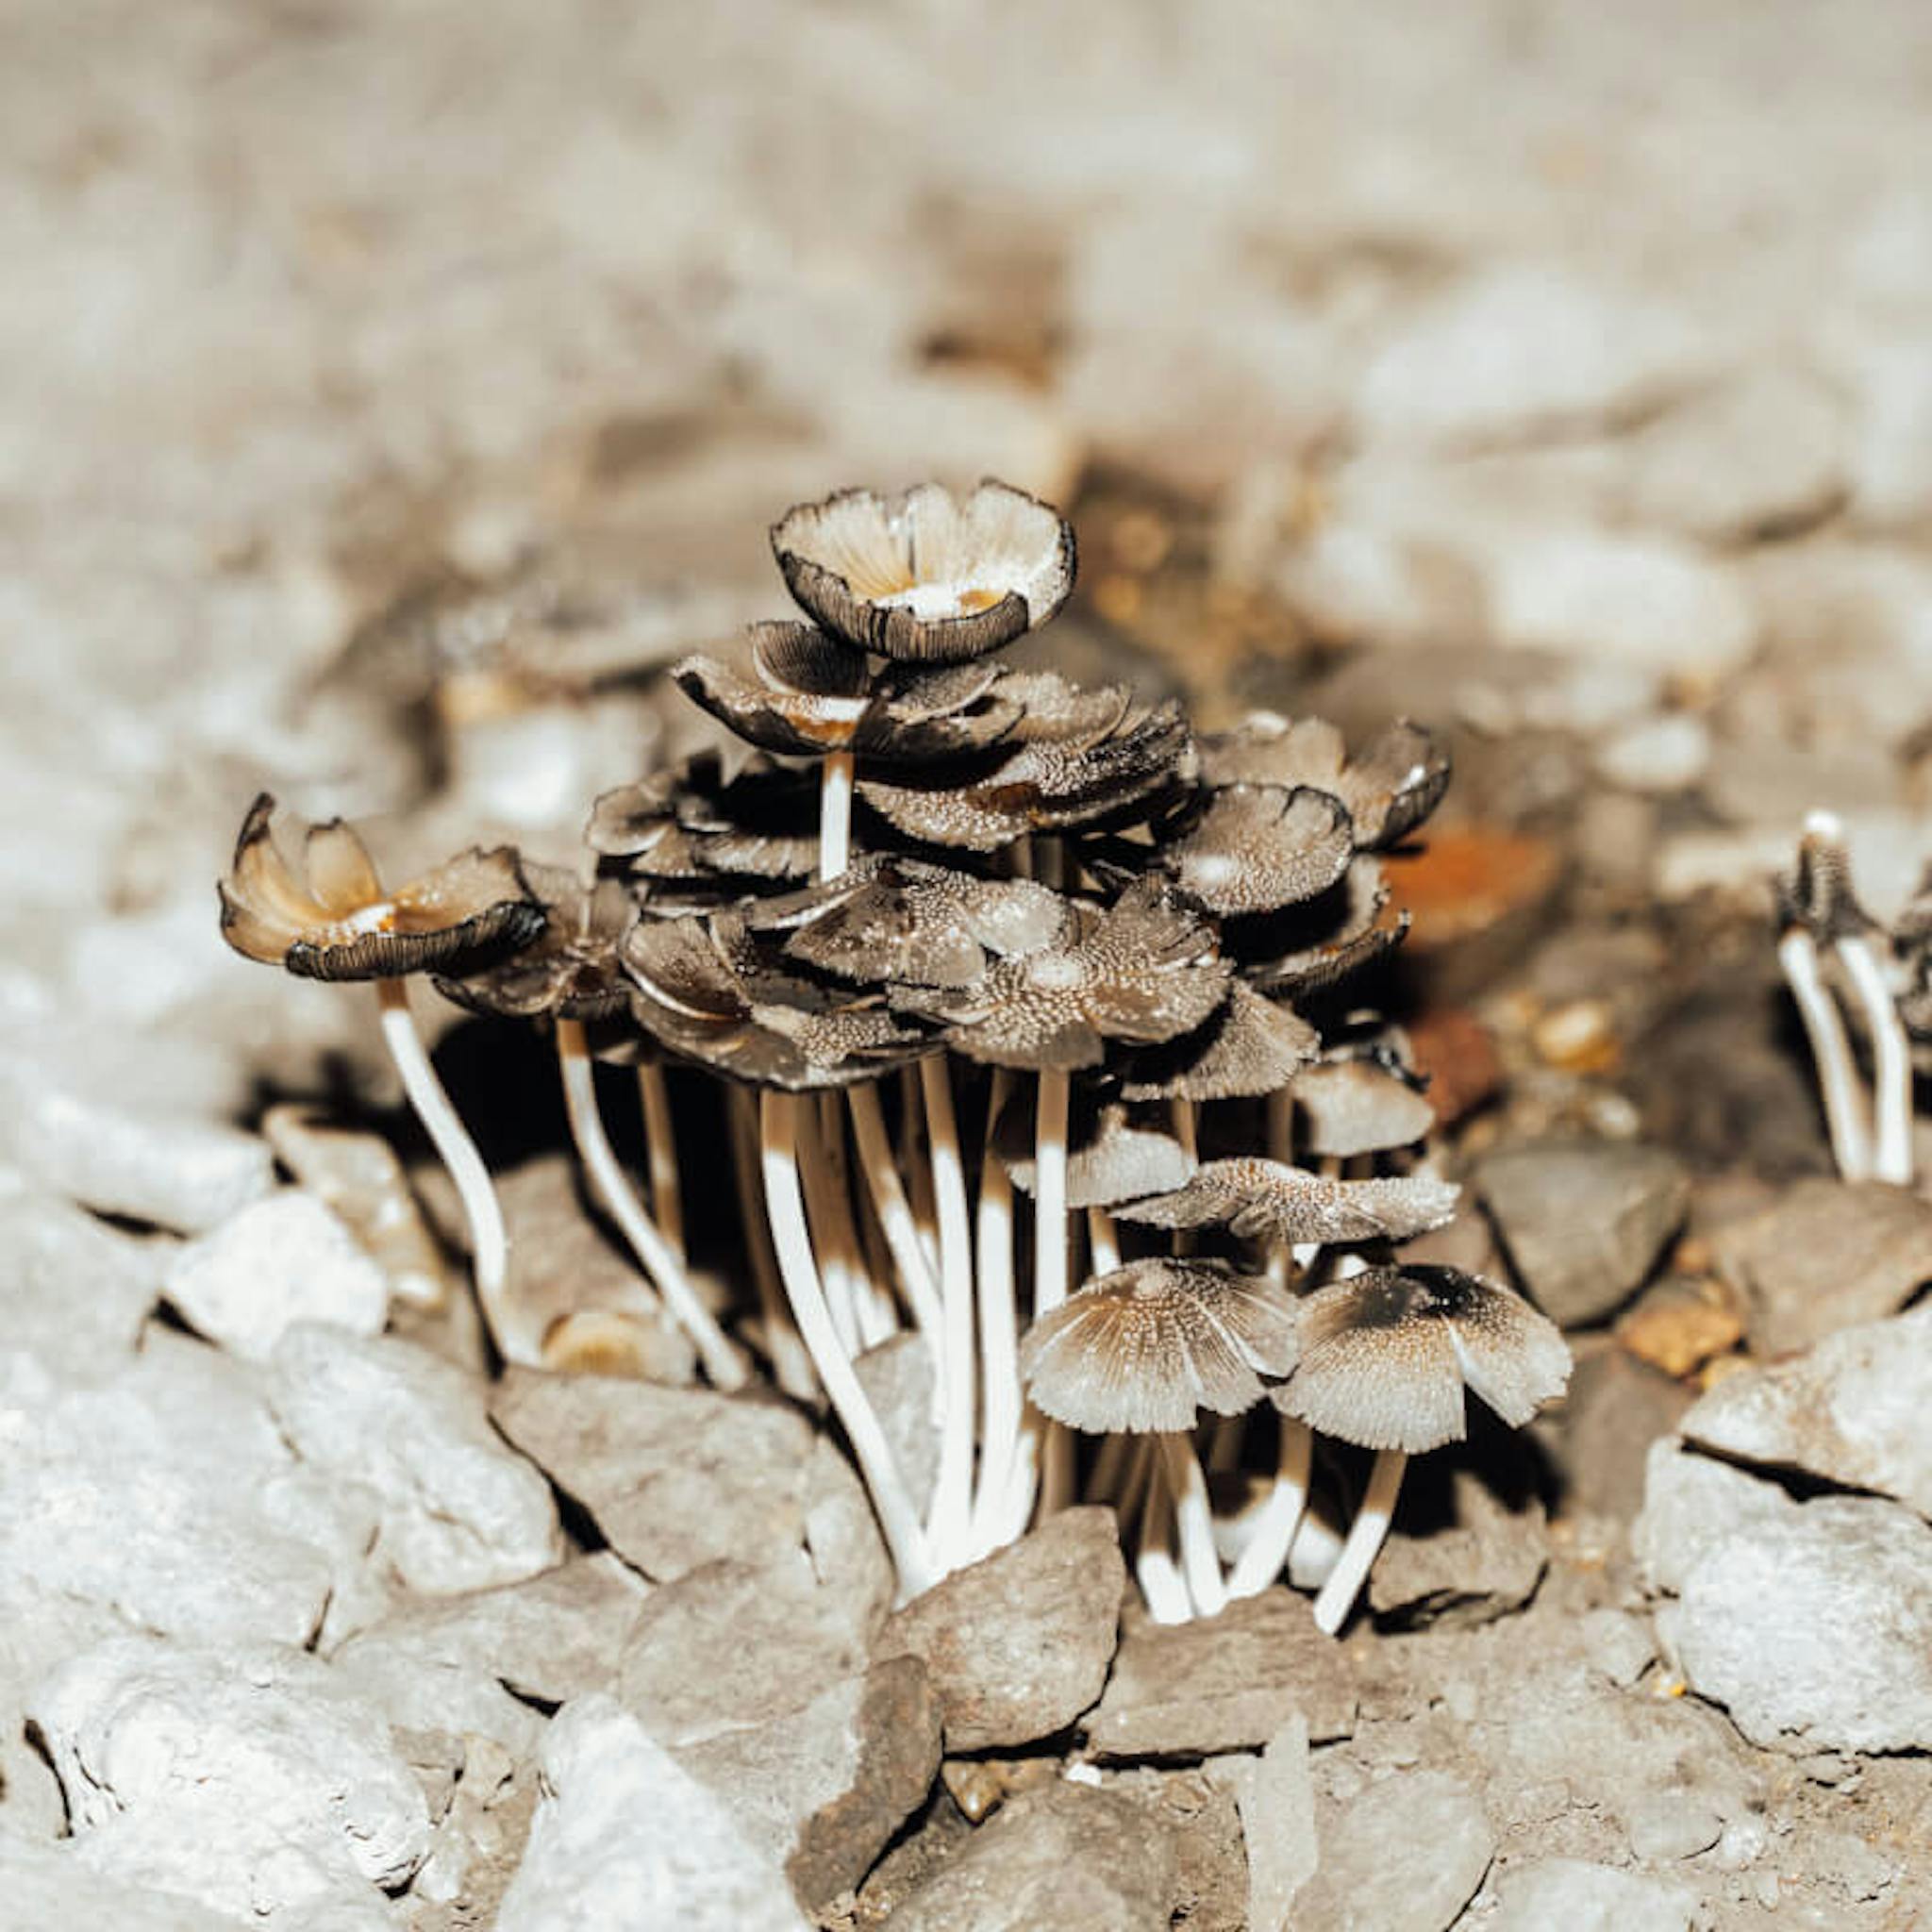 Mushrooms growing among stones.